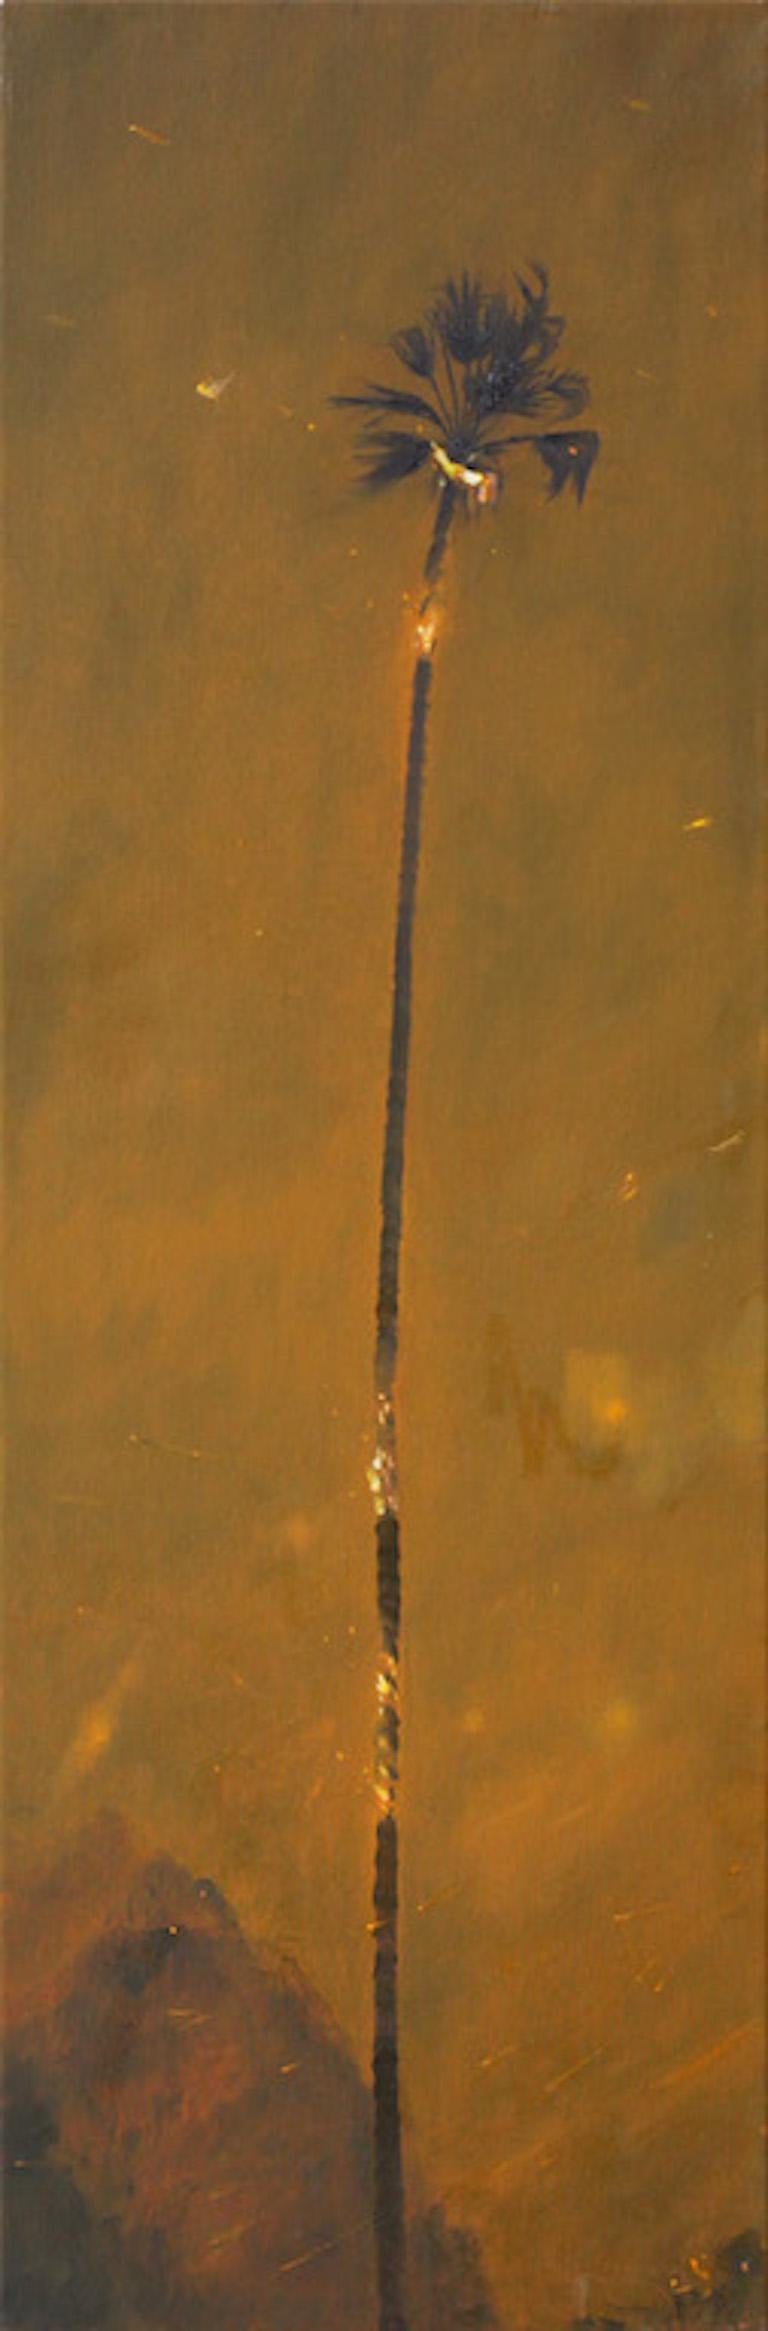 Perry Vàsquez Landscape Painting - Contemporary Conceptual Palm Tree Painting, "Burnt Palm Tree"